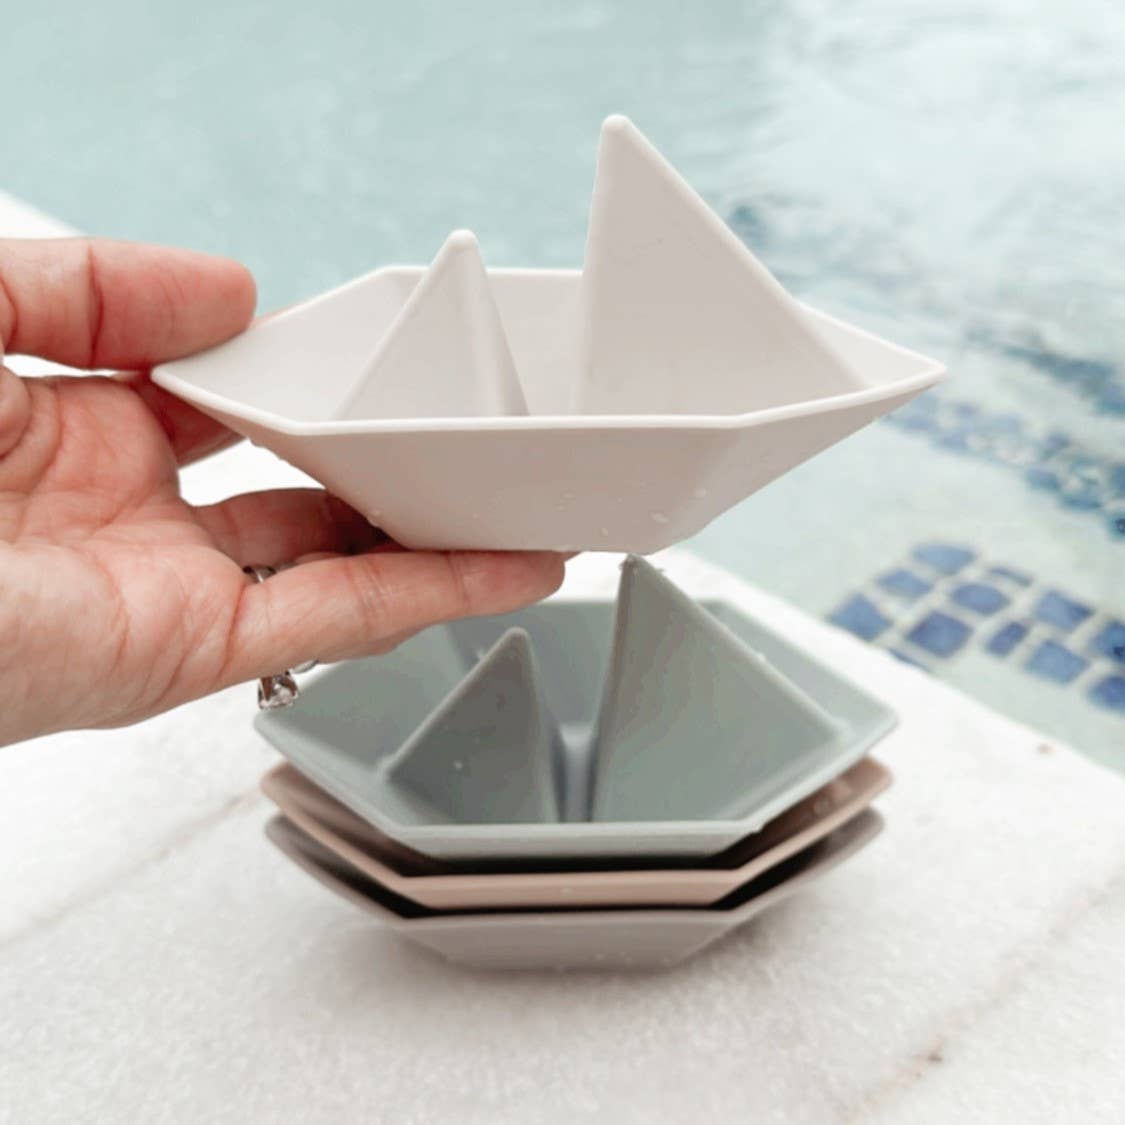 Floating Boat Bath Toy Set